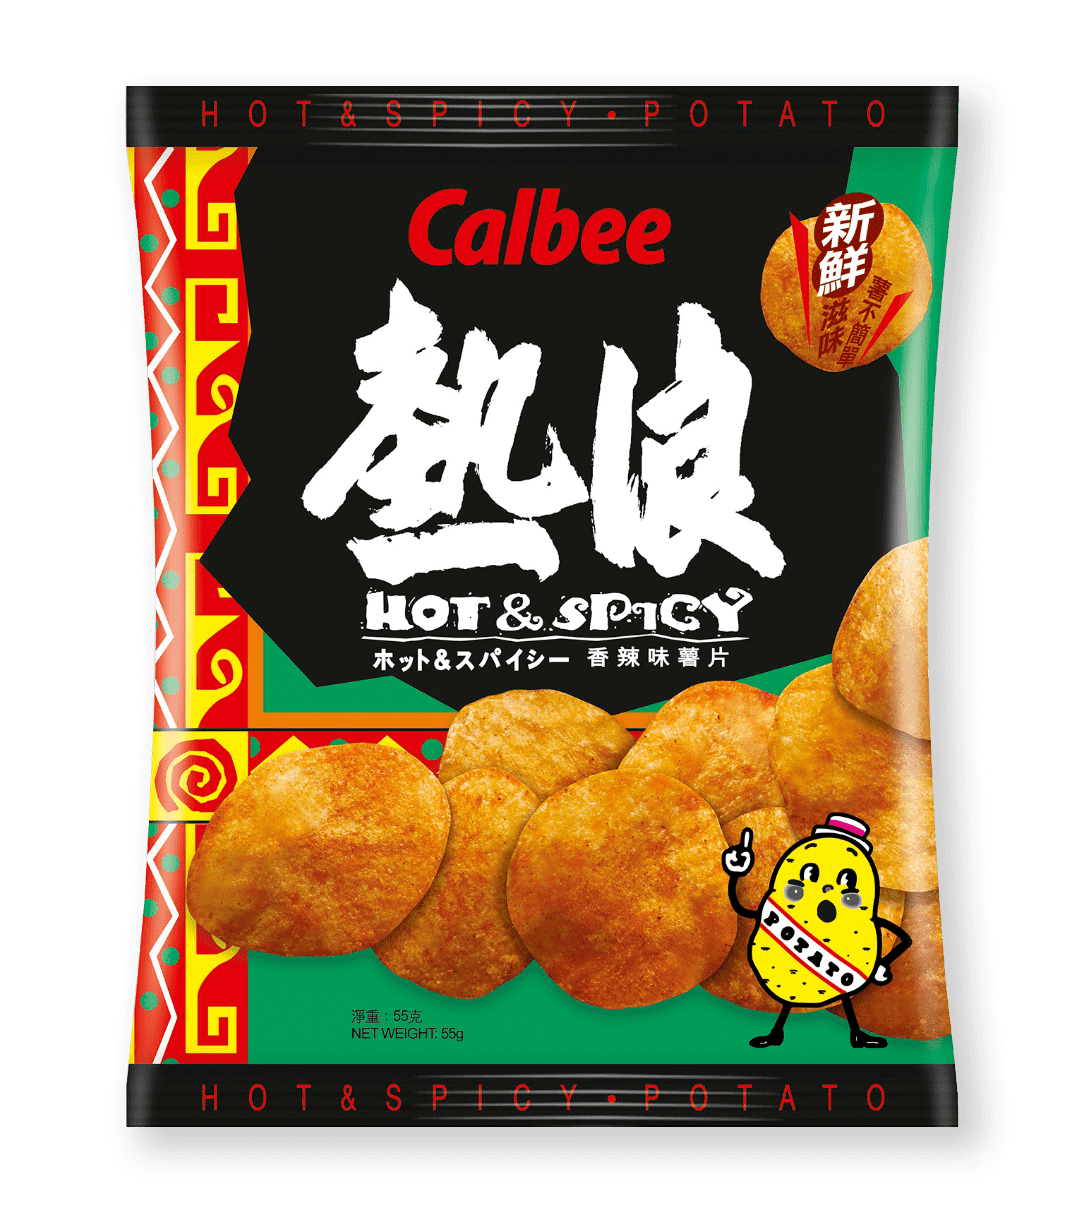 Calbee Australia - World Foods - Potato Chips - Hot & Spicy